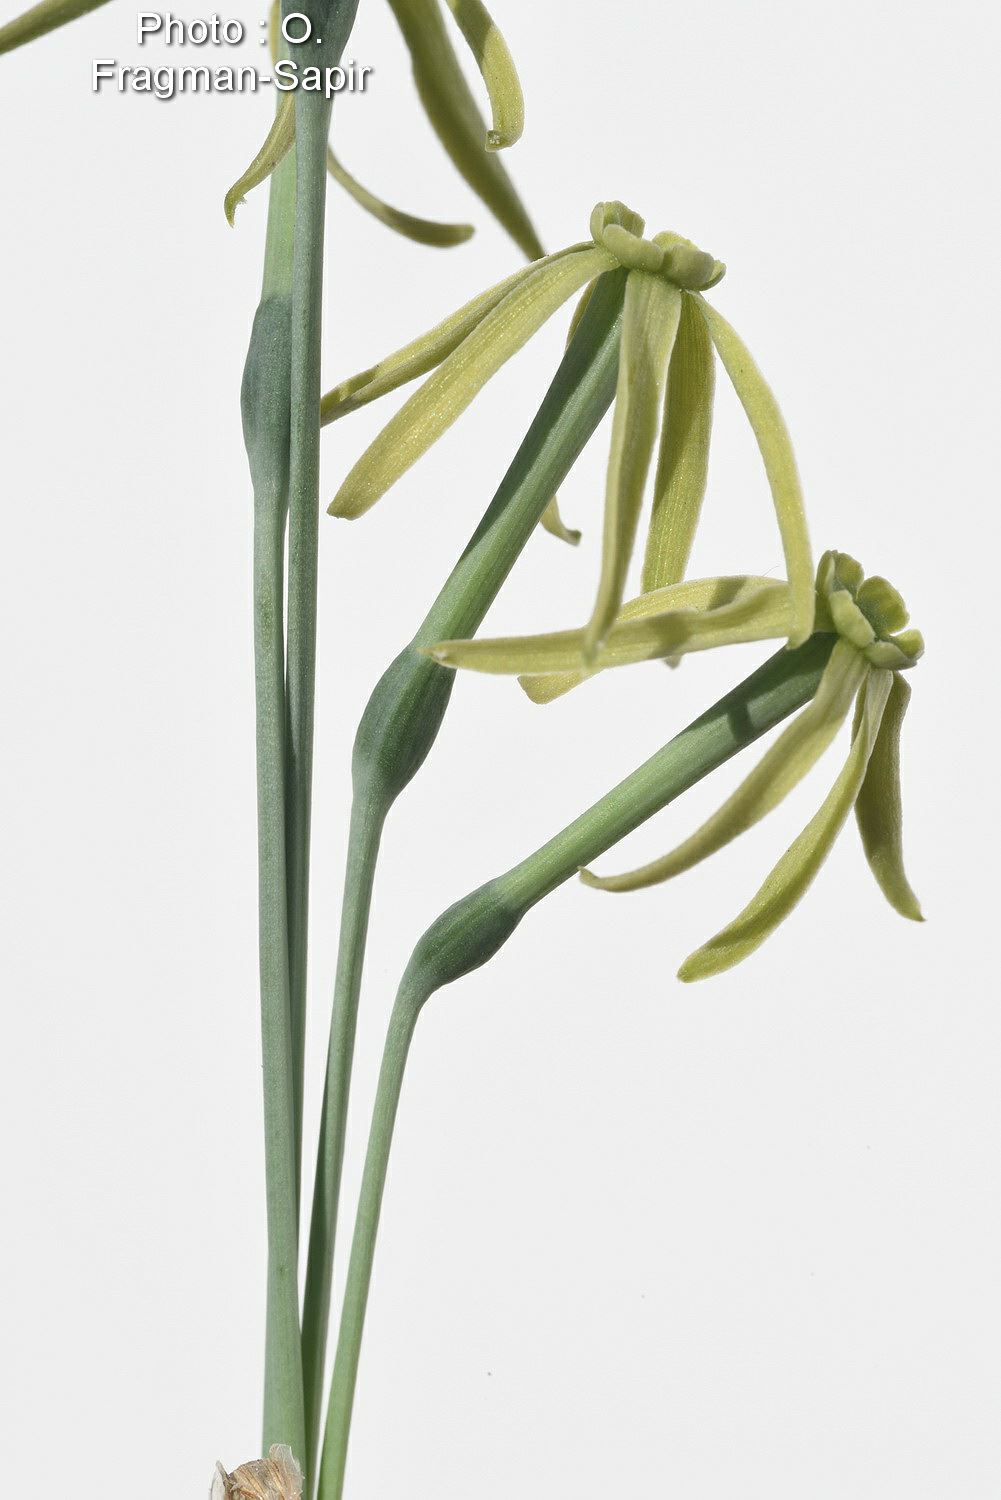 Narcissus viridiflorus - Green-flowered Narcissus, נרקיס ירוק-פרחים, נרקיס ירוק-פרחים